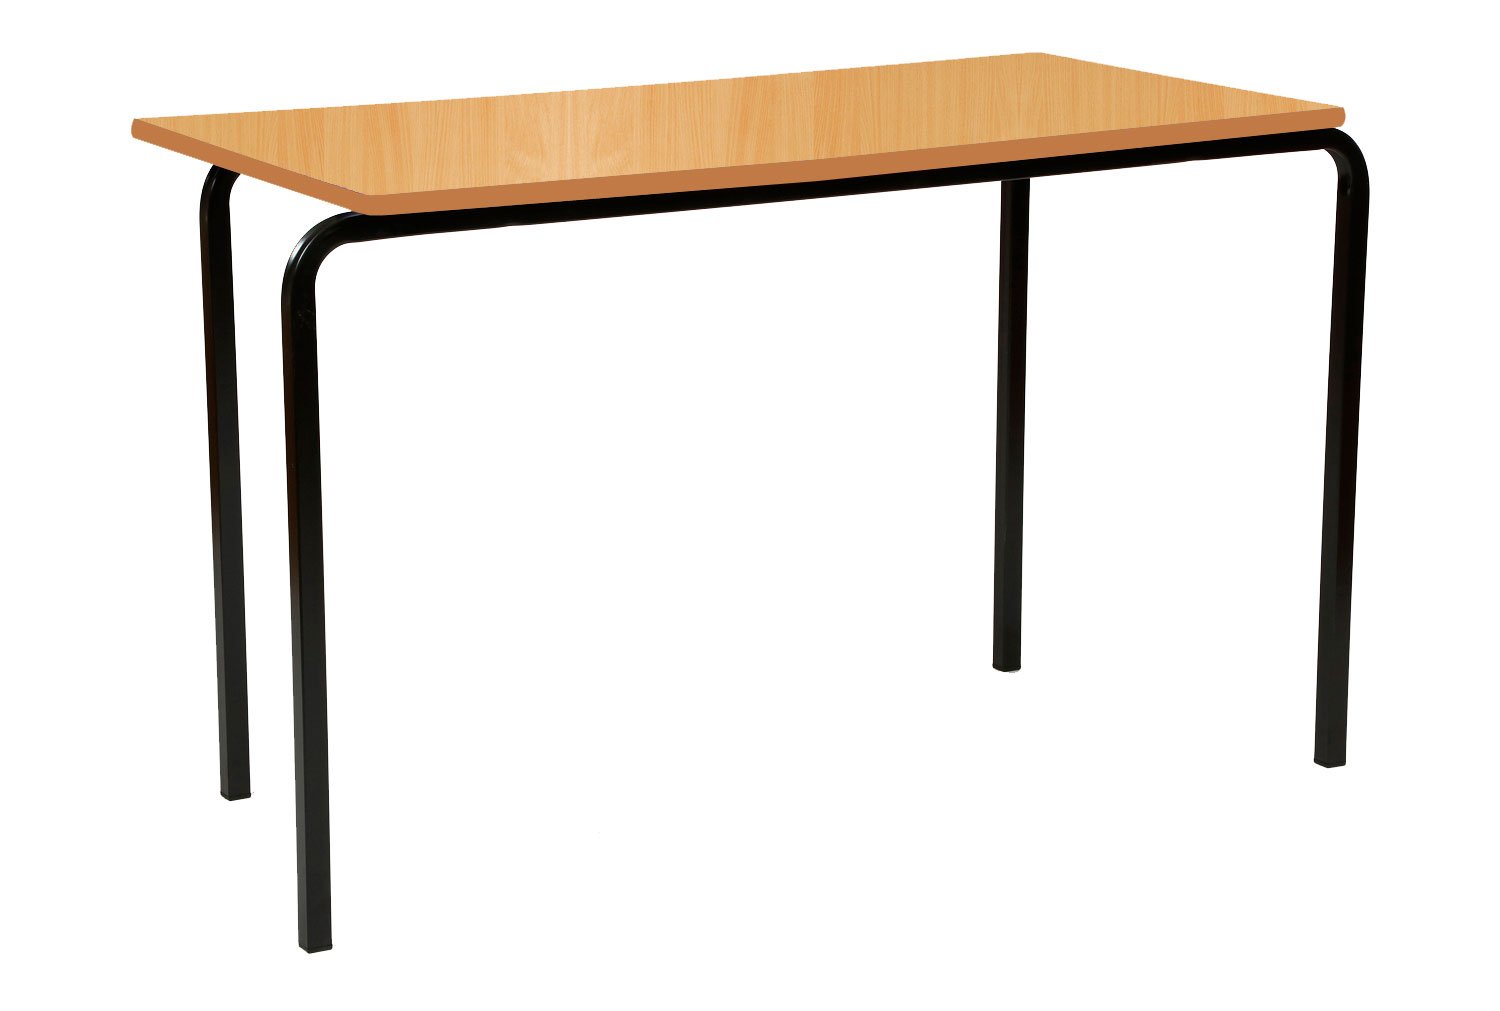 Qty 6 - Educate Crush Bent Rectangular Classroom Table 14+ Years (MDF Edge), 120wx60dx76h (cm), Black Frame, Light Grey Top